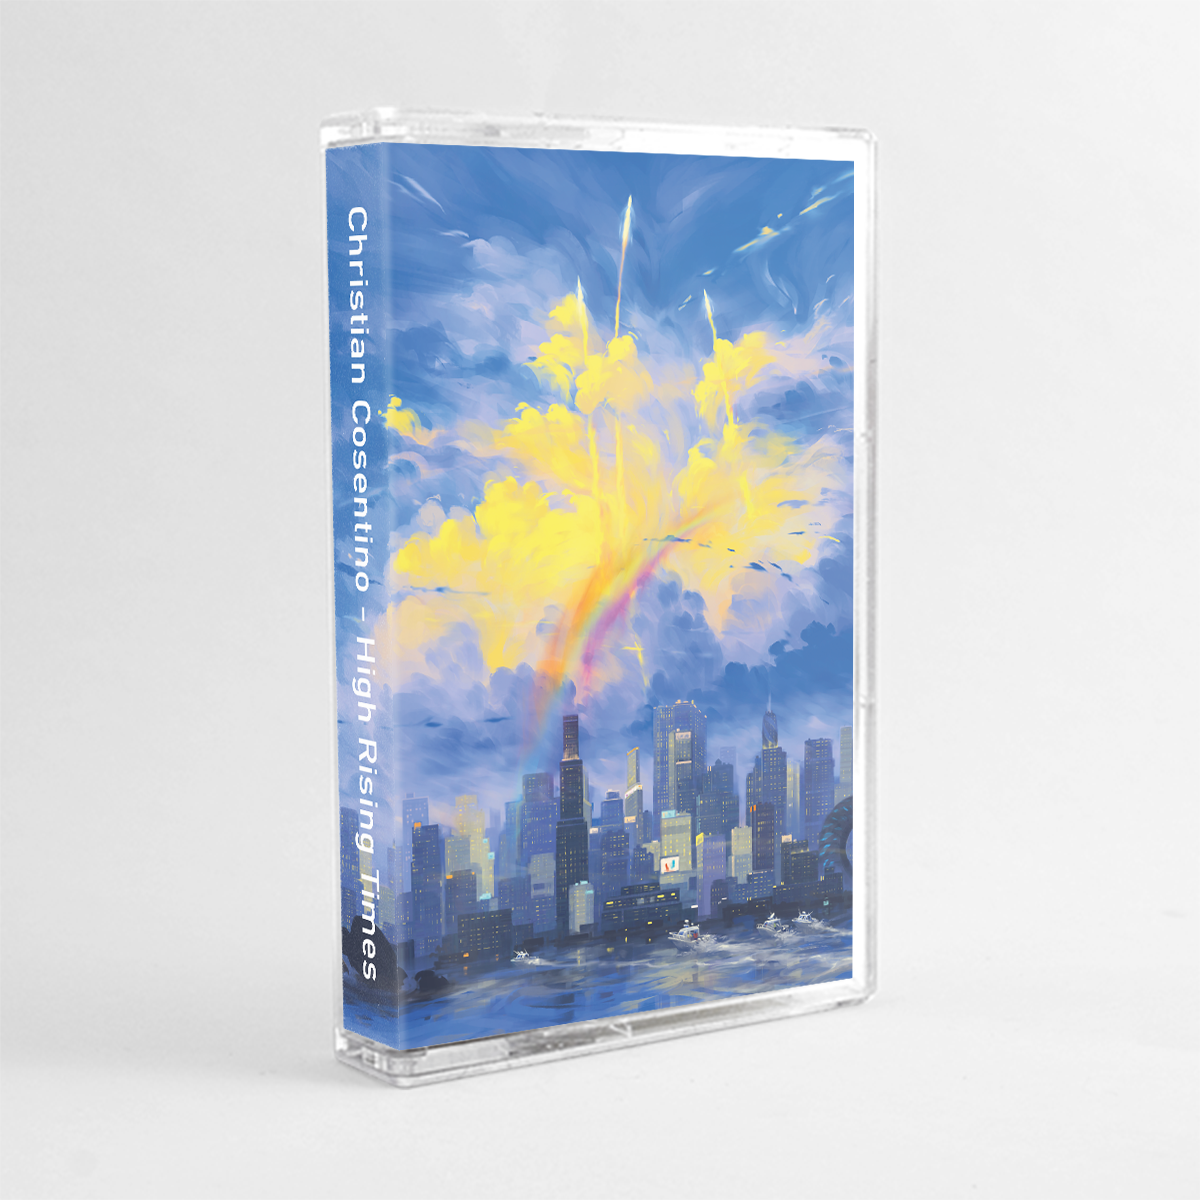 Christian Cosentino - High Rising Times cassette